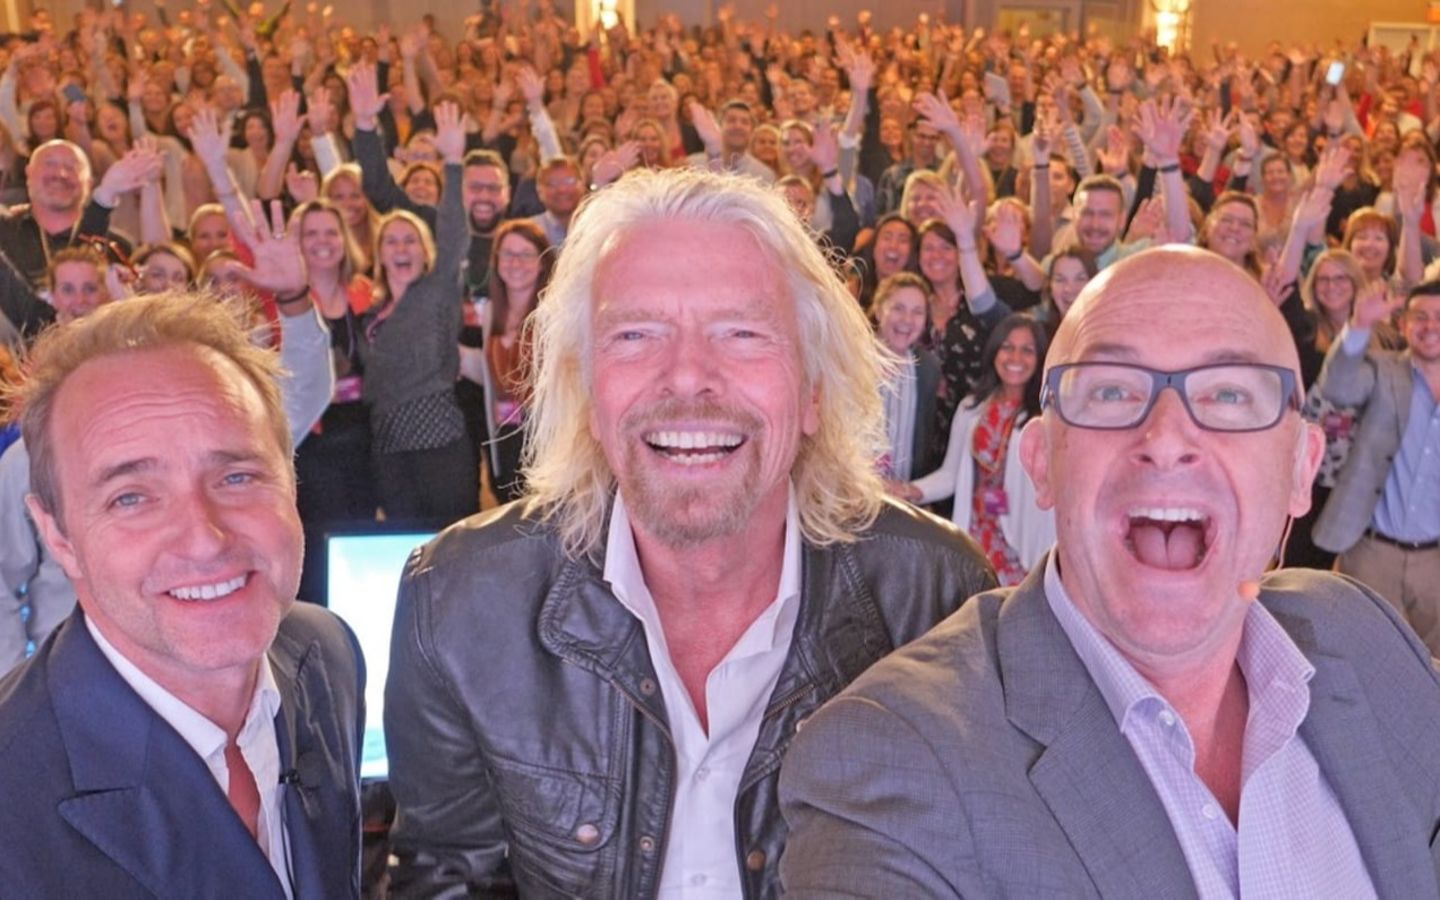 Richard Branson taking a selfie with Dave Osborne and Mark Jeffries